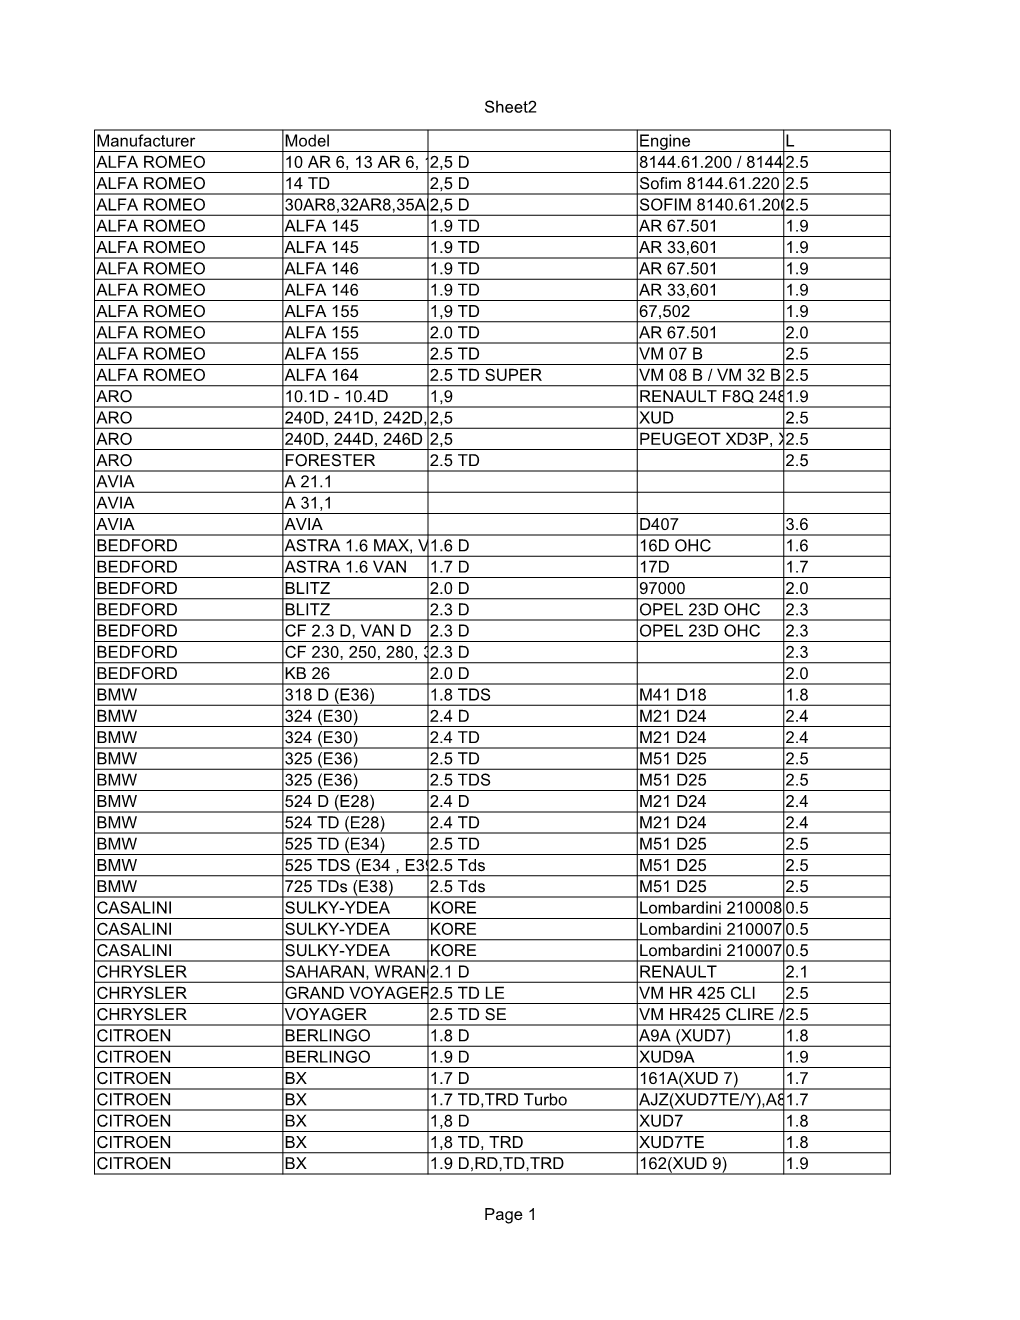 Sheet2 Page 1 Manufacturer Model Engine L ALFA ROMEO 10 AR 6, 13 AR 6, 14 AR 6 2,5 D 8144.61.200 / 8144.67.200 2.5